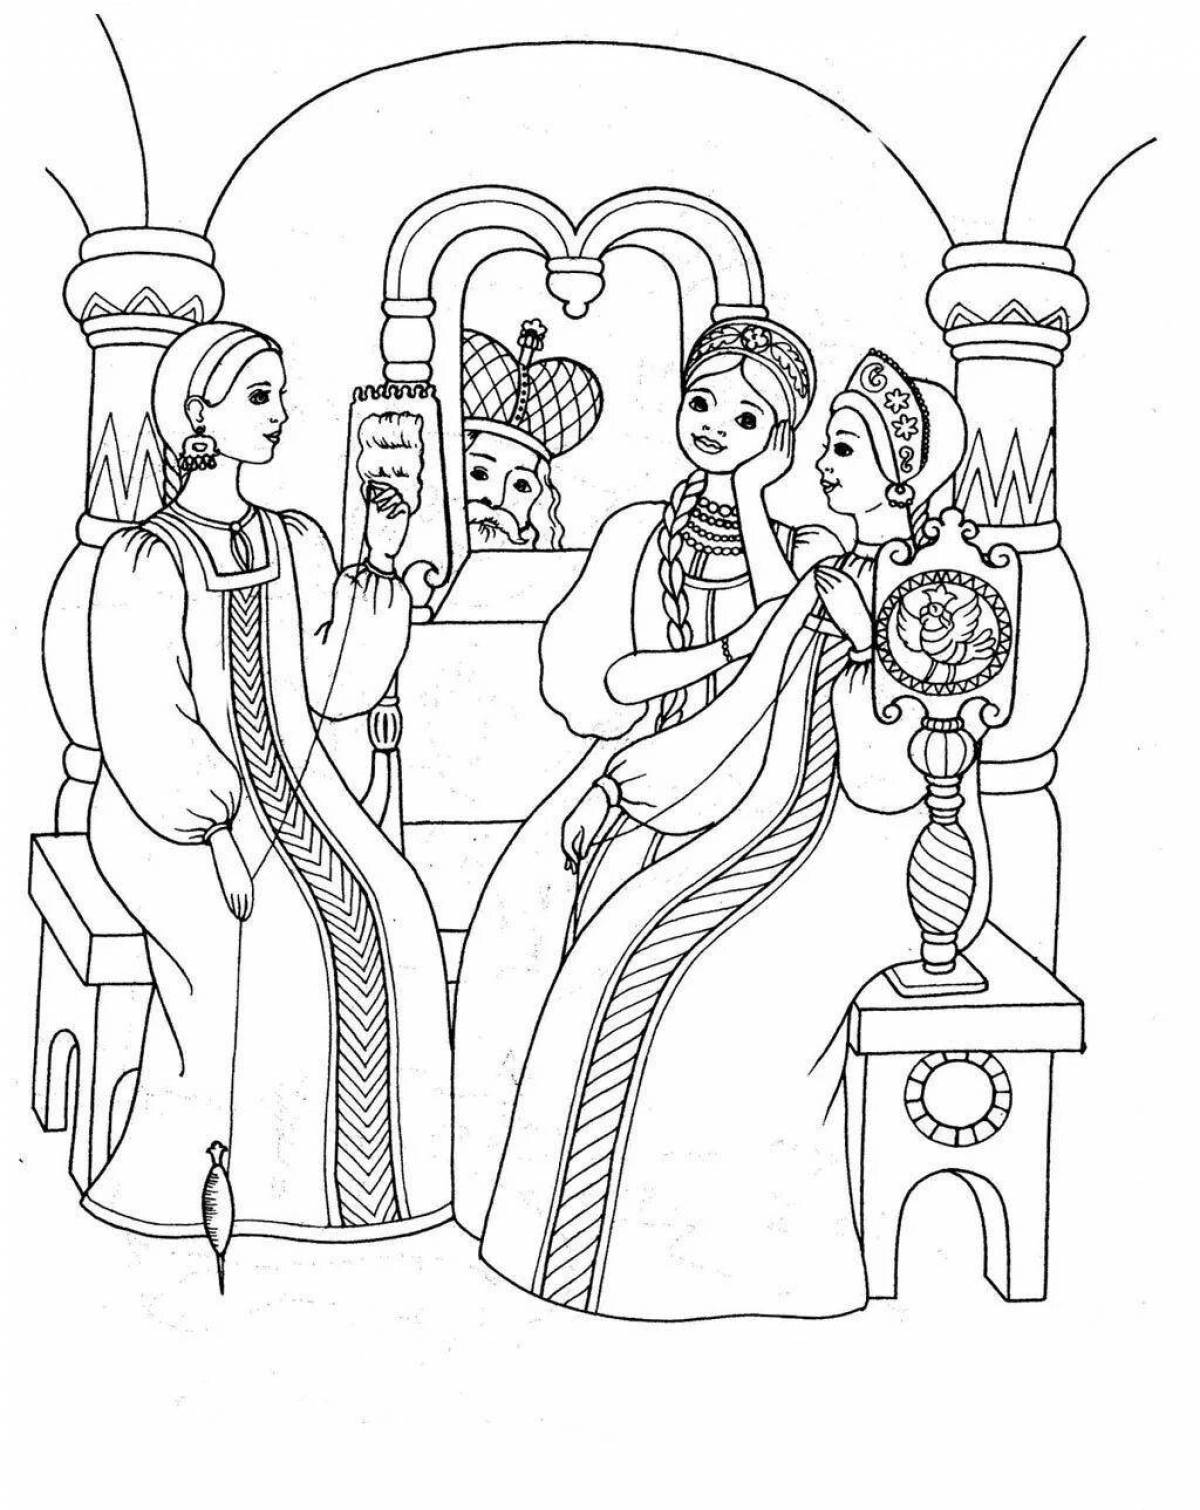 Illustration for the tale of Tsar Saltan #1